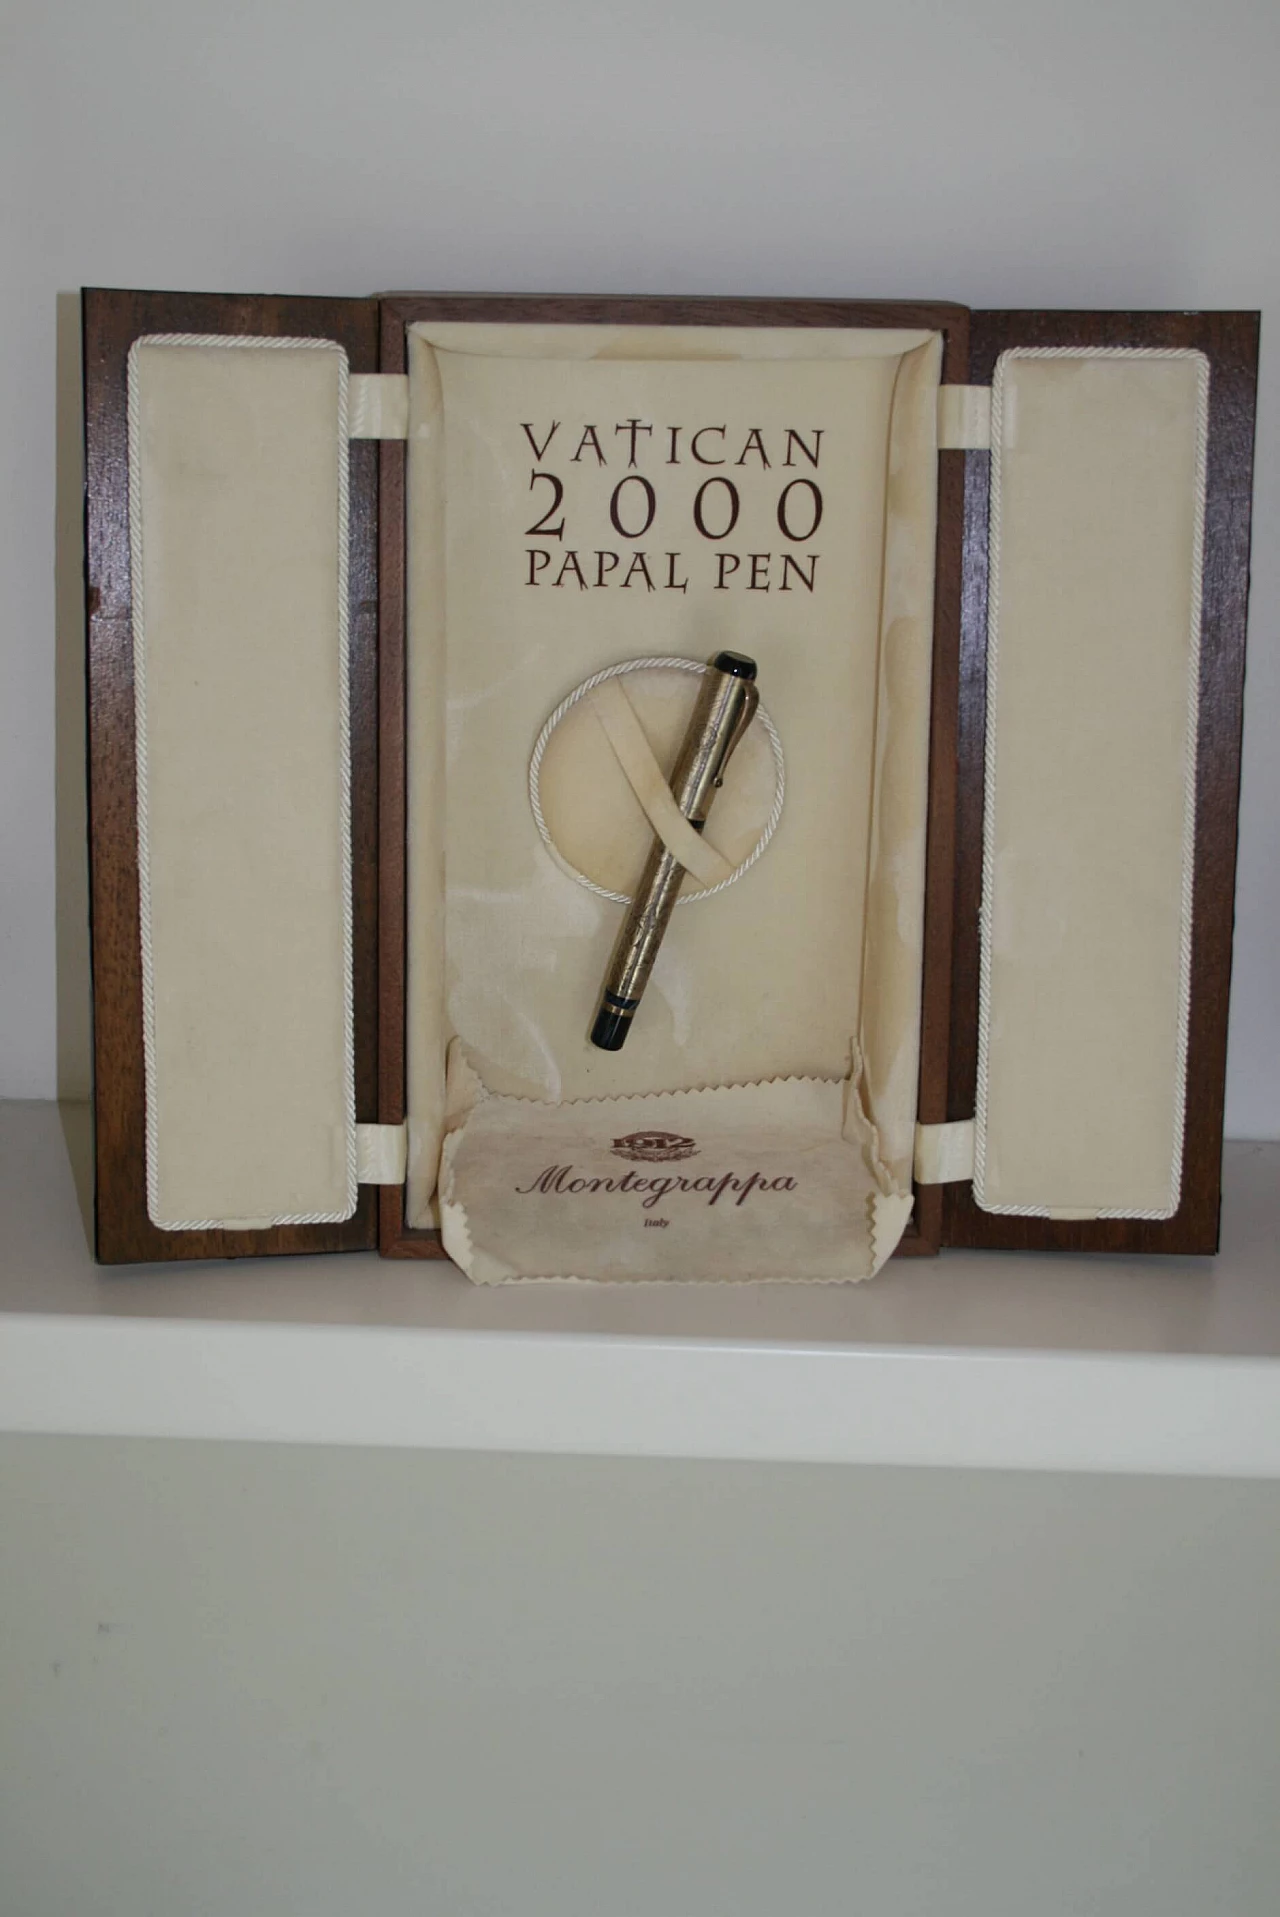 Penna Stilografica Montegrappa Vatican 2000 Papal Pen 1067274